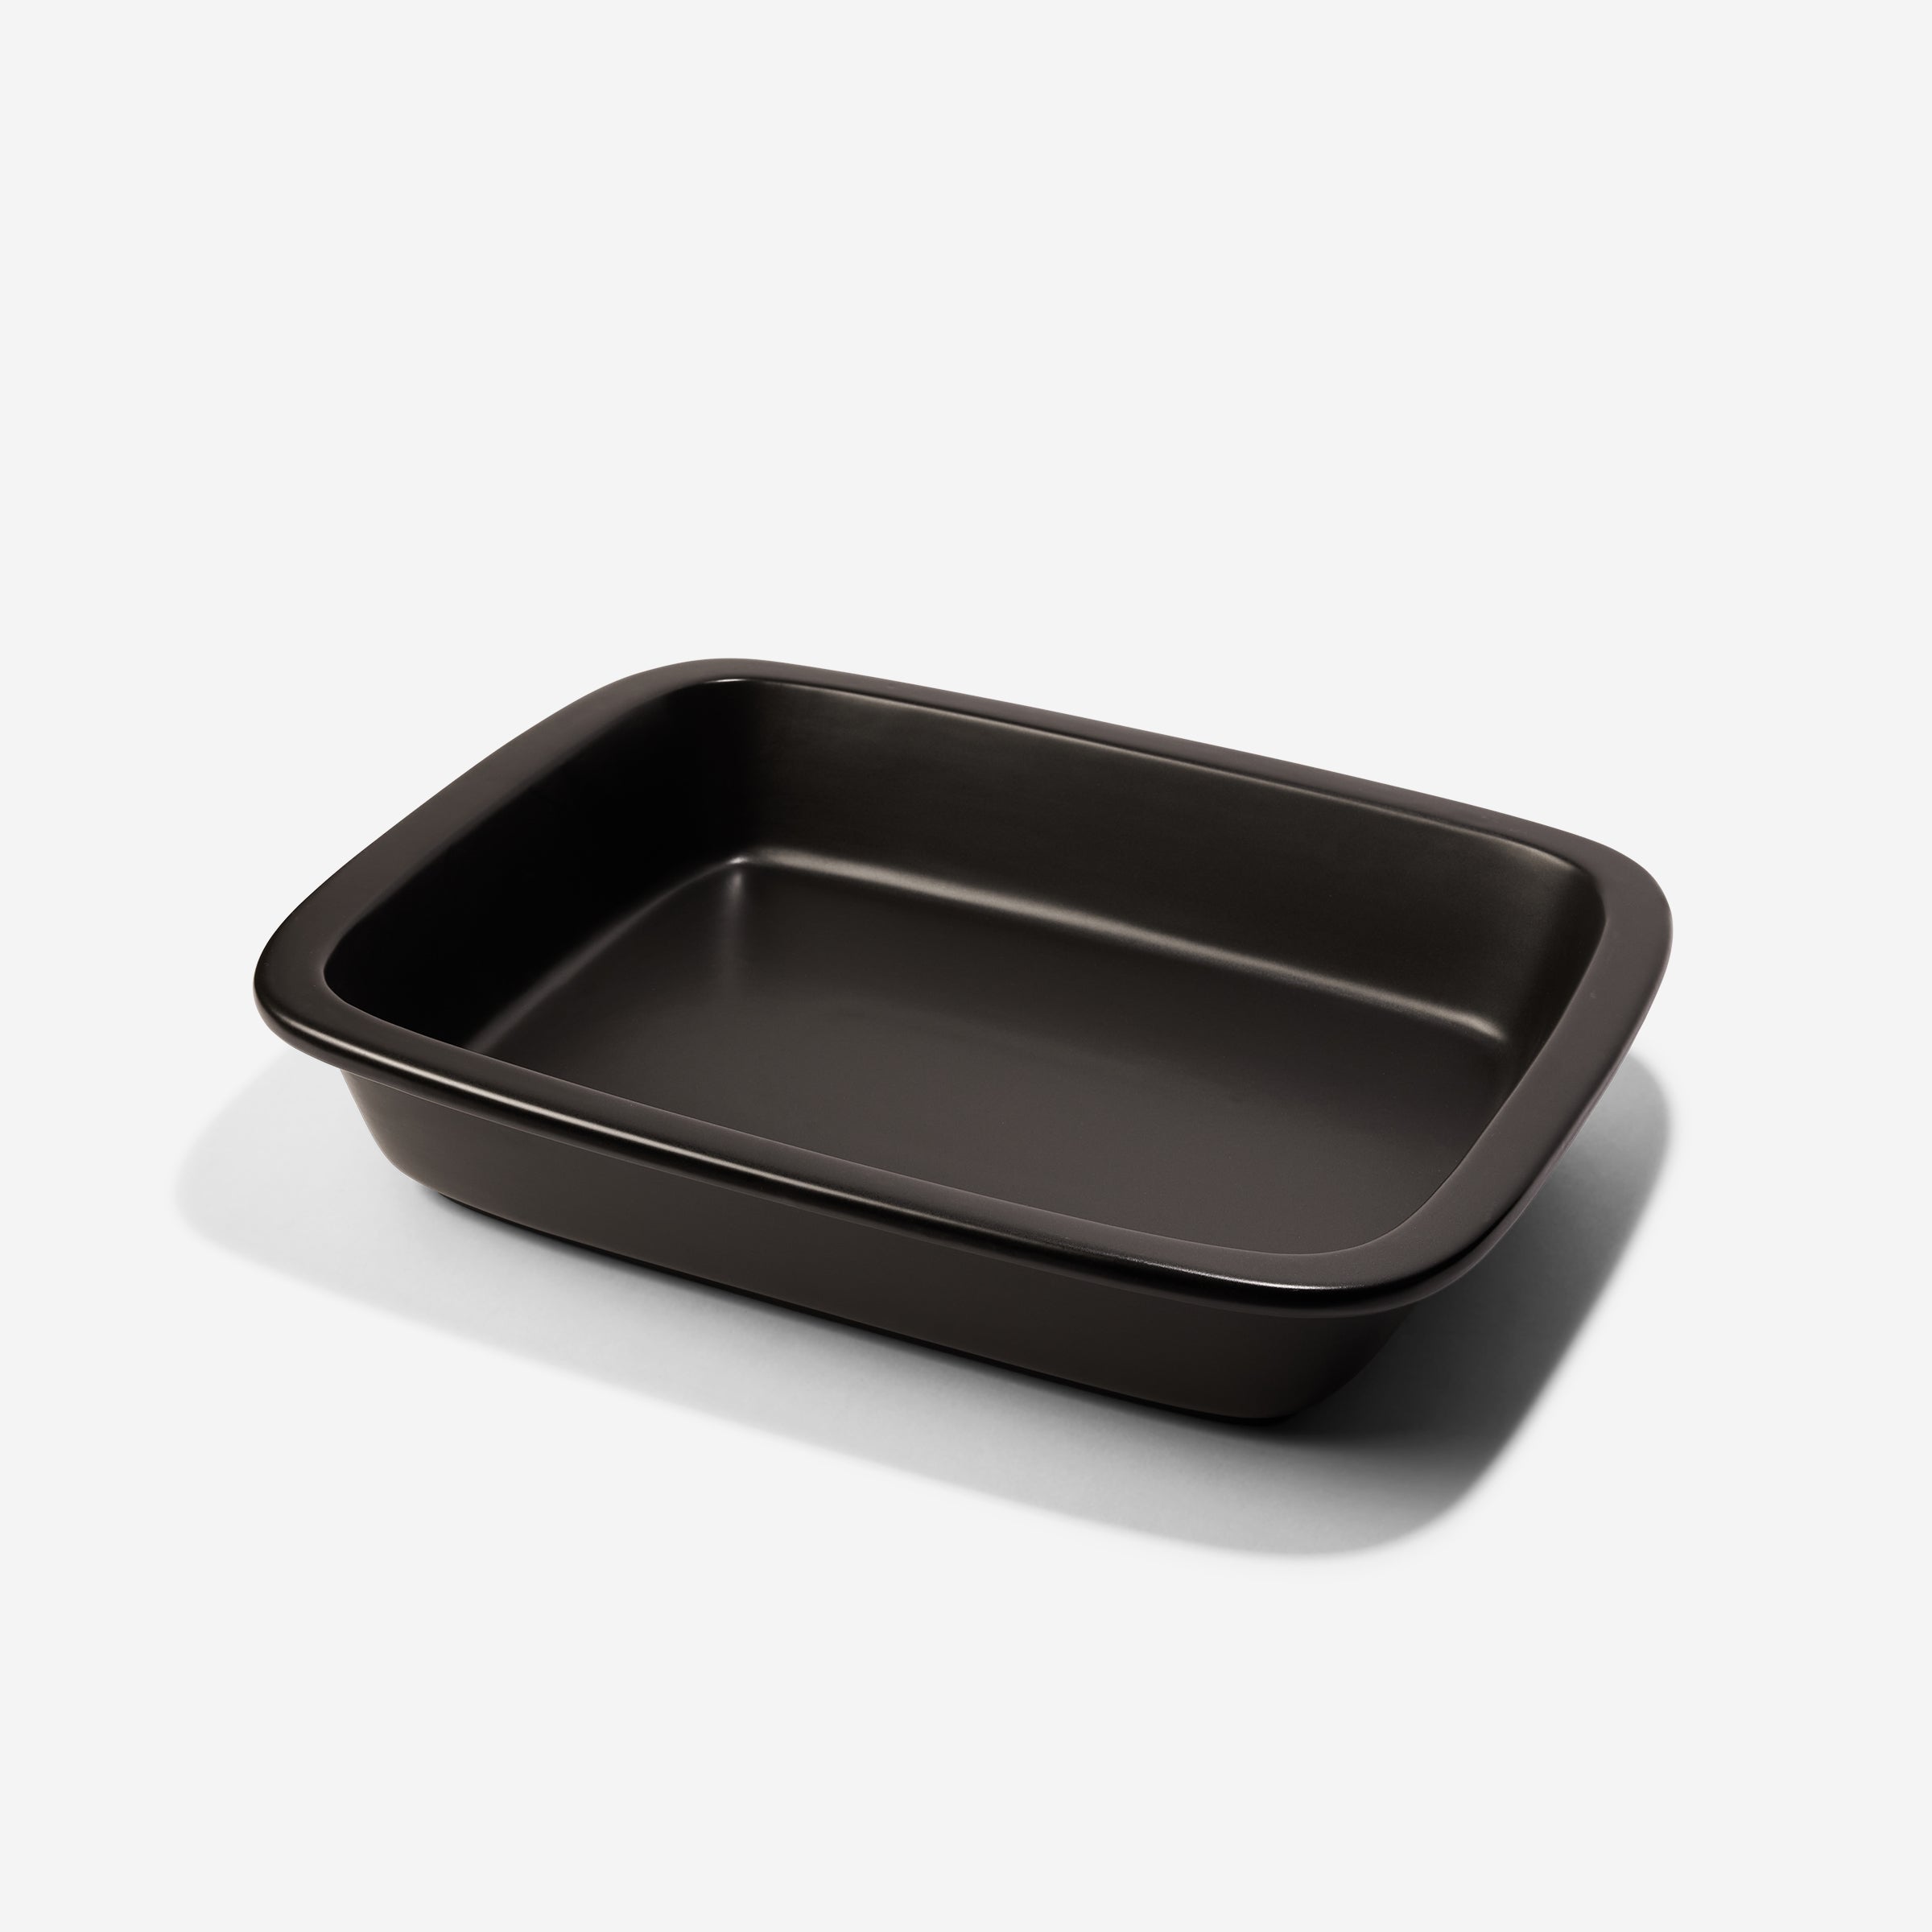 2 to 6-Quart Ceramic Rectangular Baking Dish | Xtrema Bakeware 6-Quart